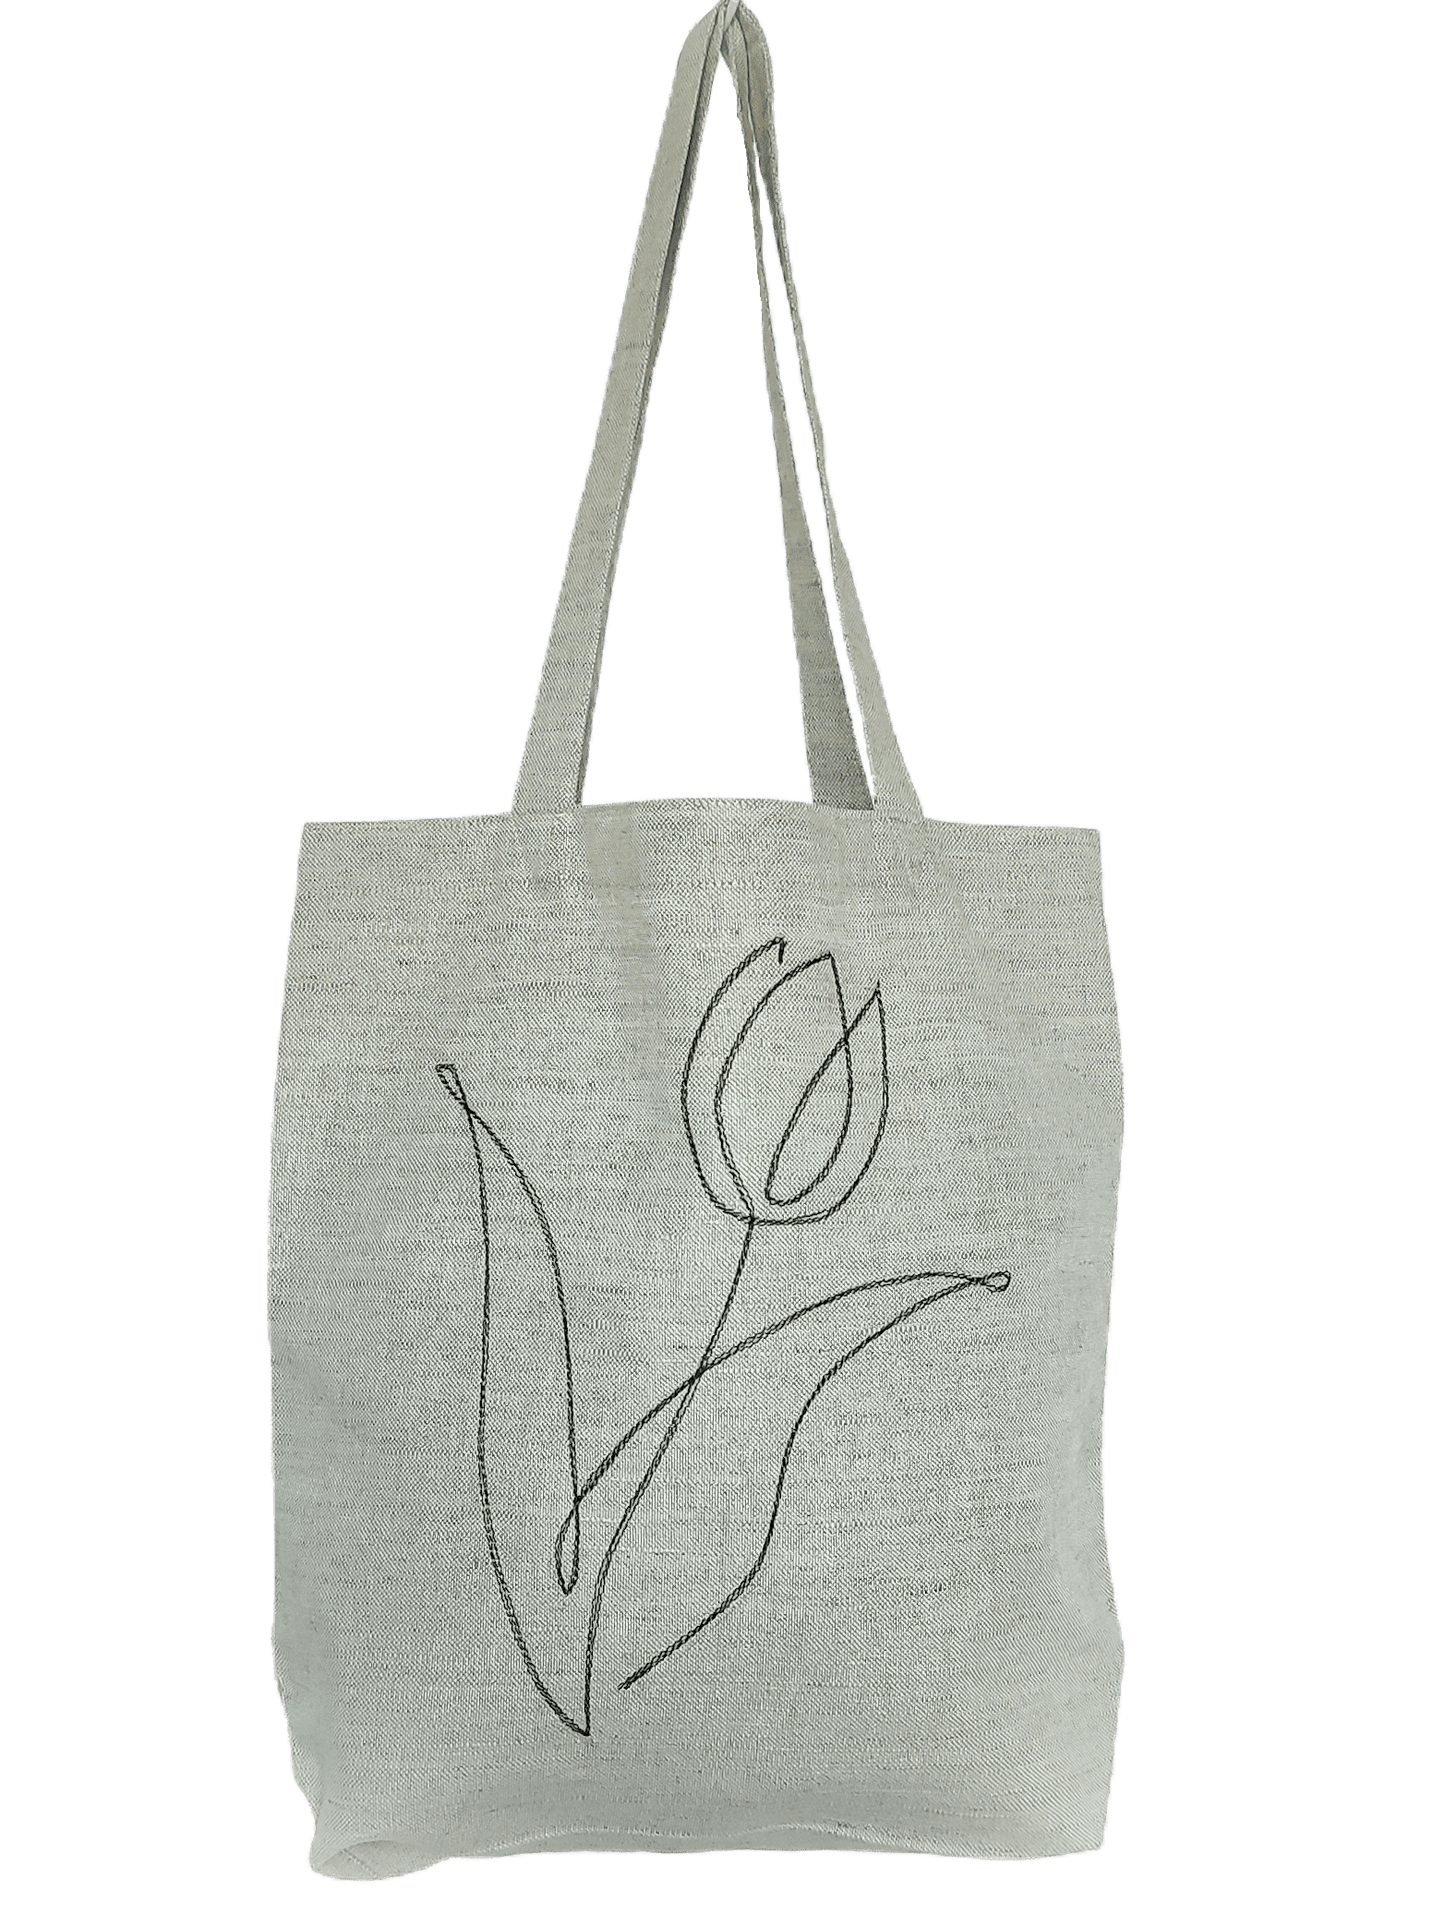 Shopping bag TULIP